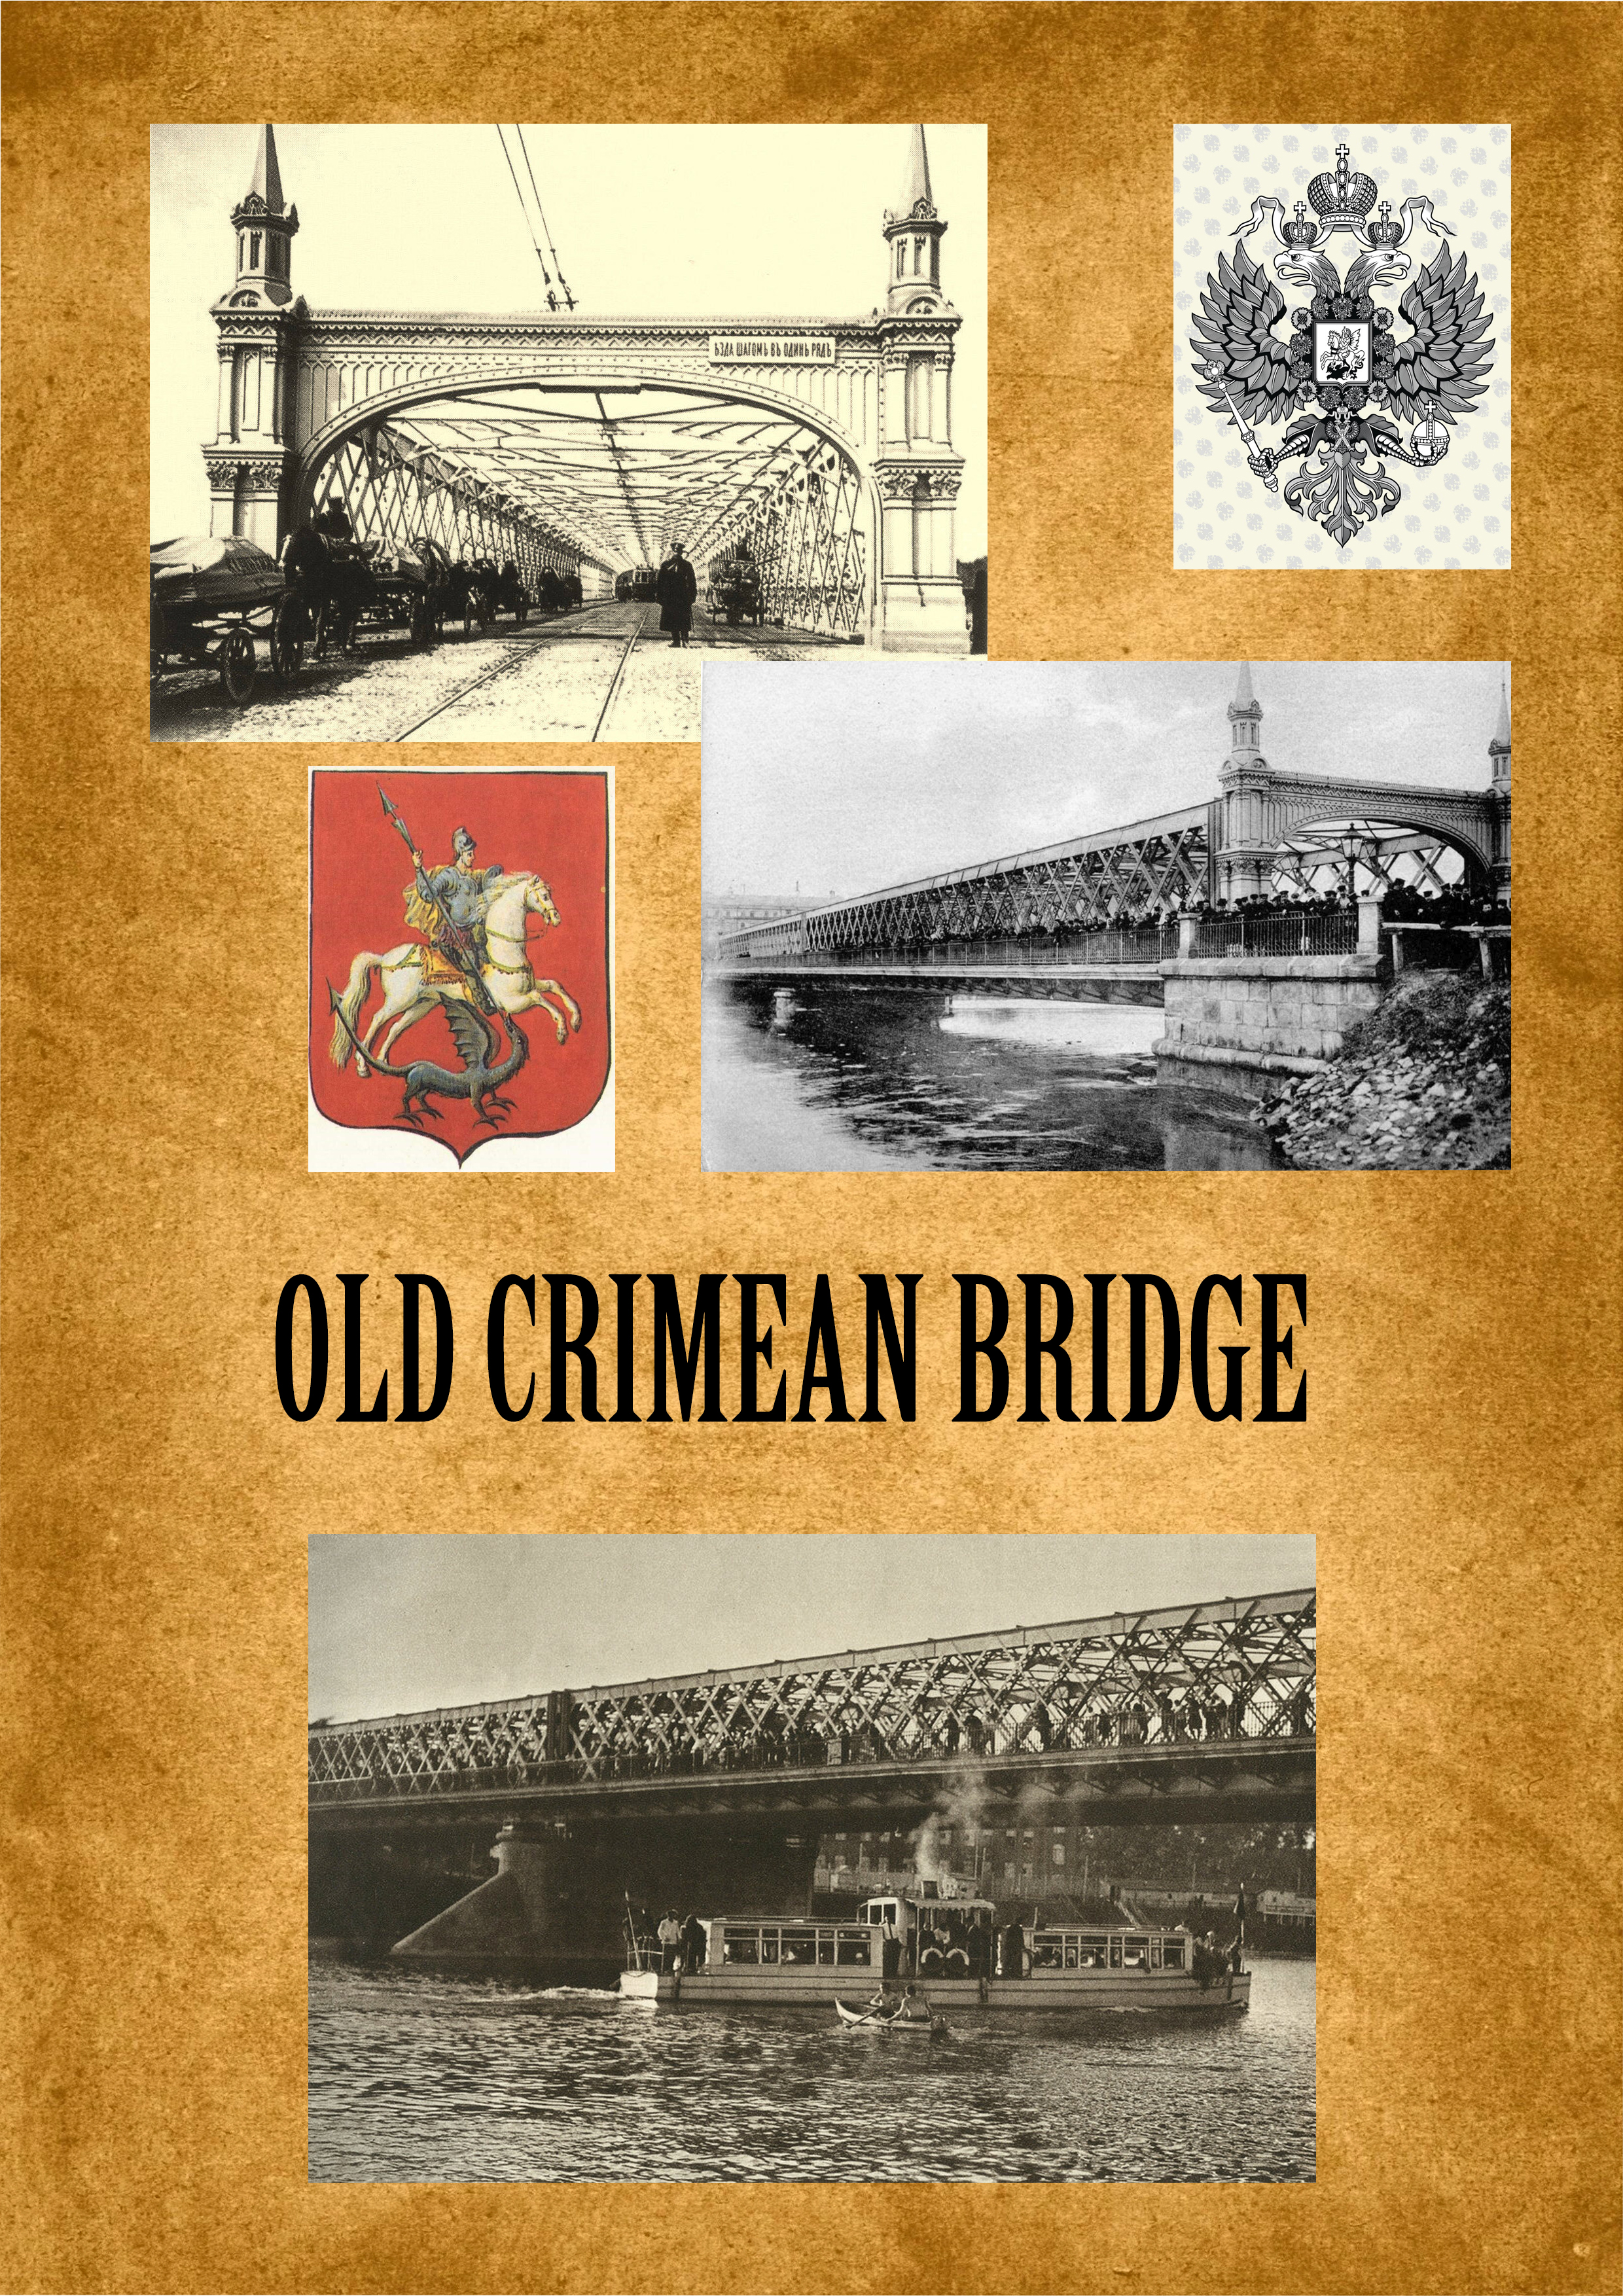 Old Crimean bridge